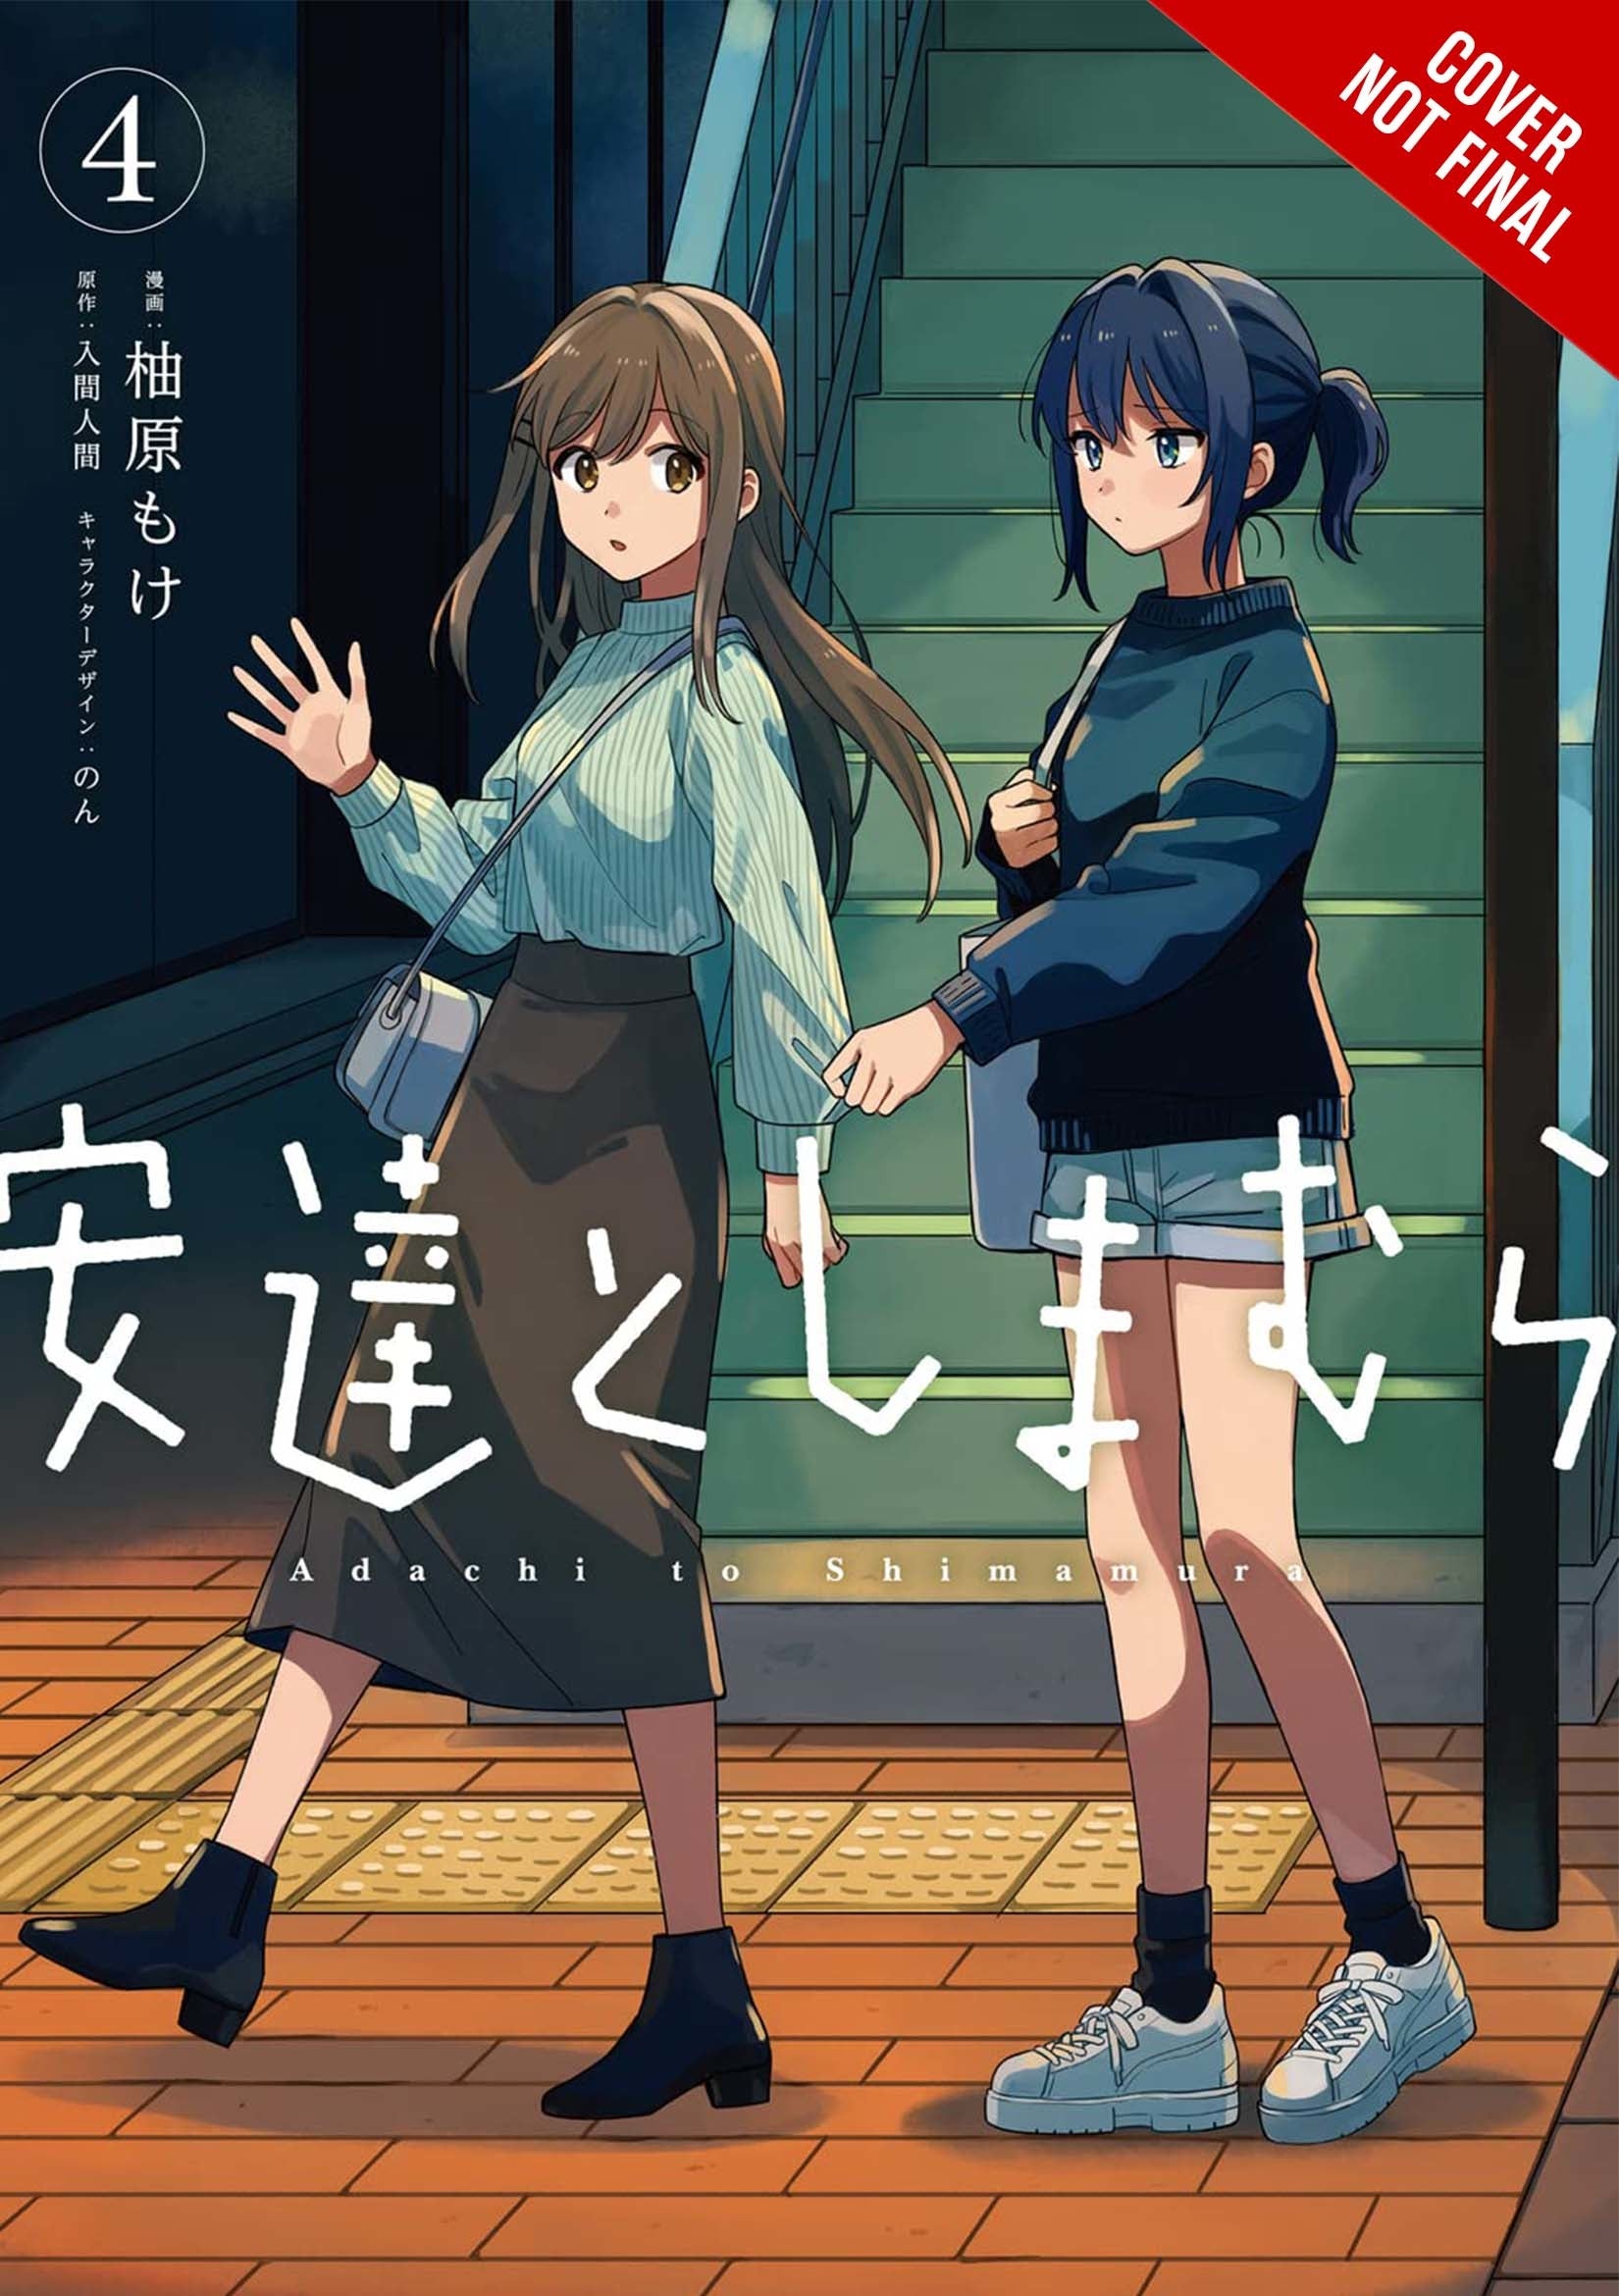 Adachi and Shimamura, Vol. 2 (manga) on Apple Books